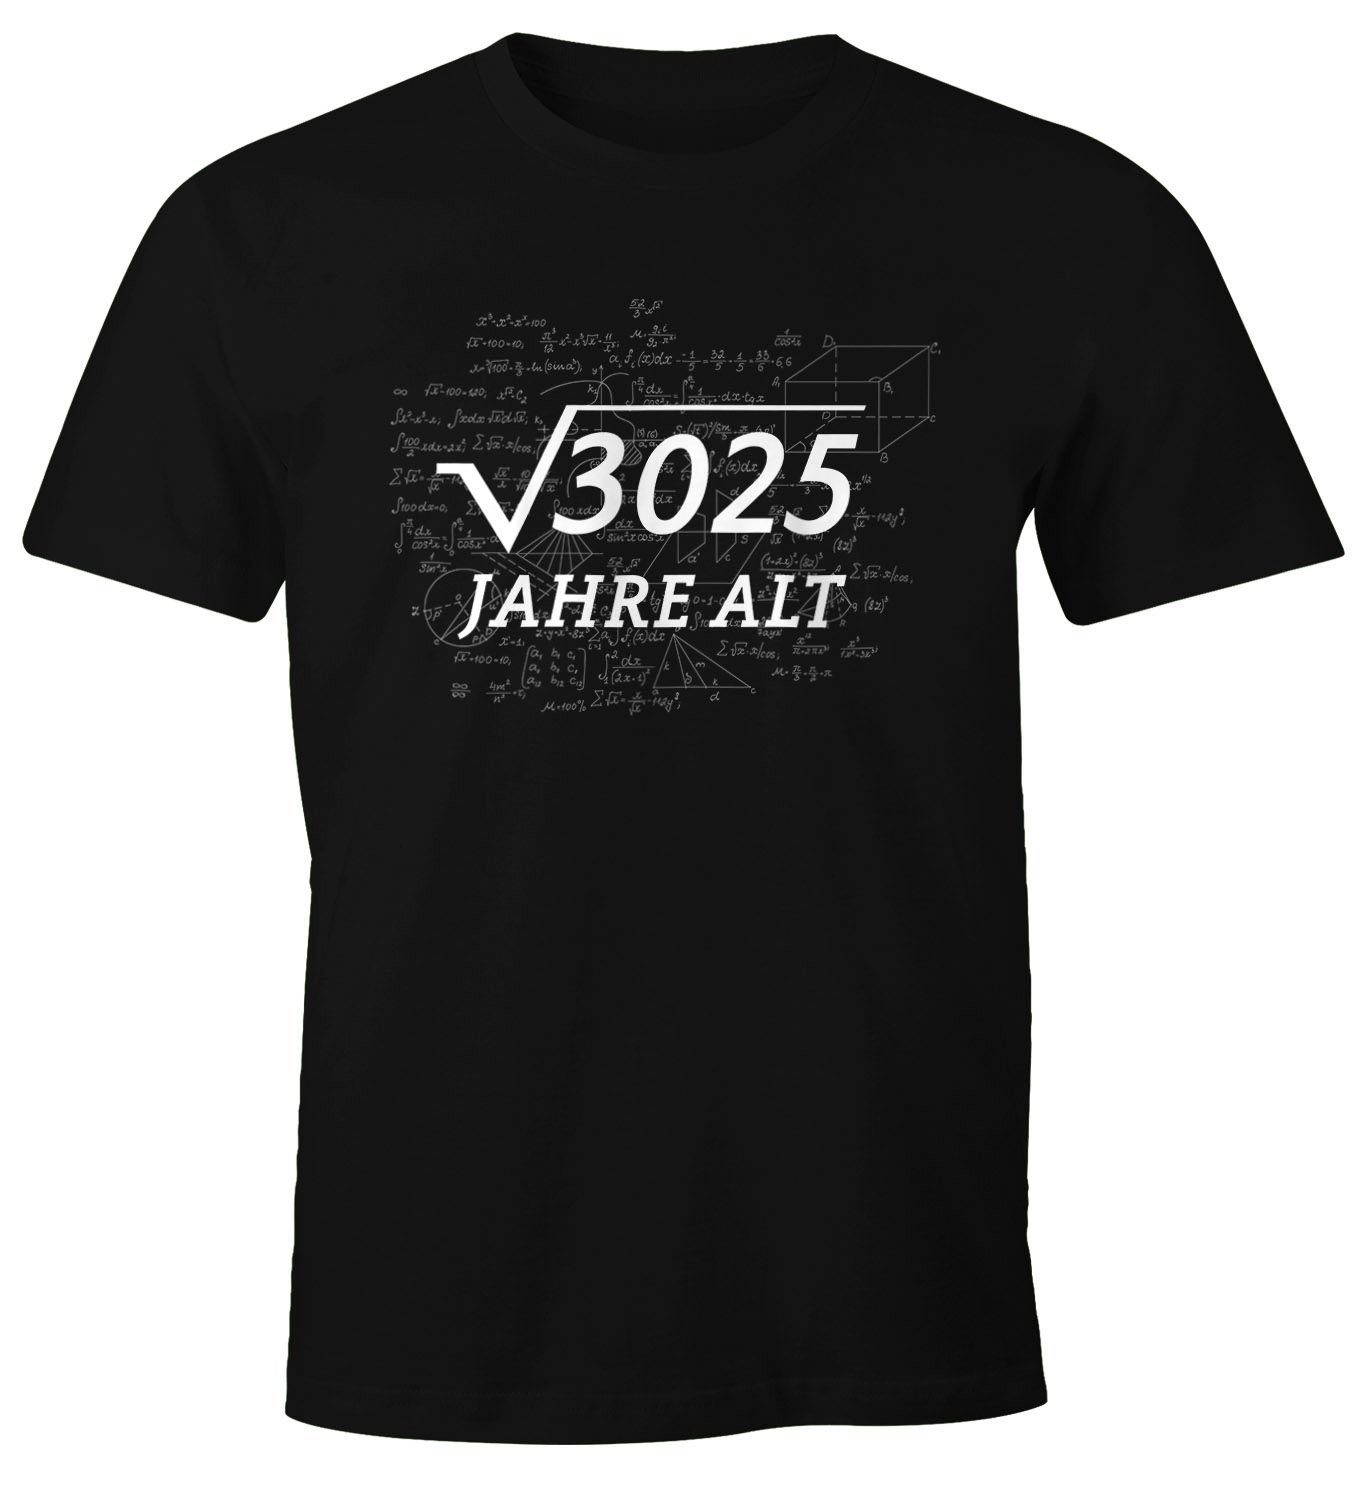 55 Geschenk Moonworks® schwarz Print T-Shirt Herren Print-Shirt Fun-Shirt Wurzel MoonWorks mit Geburtstag Mathe